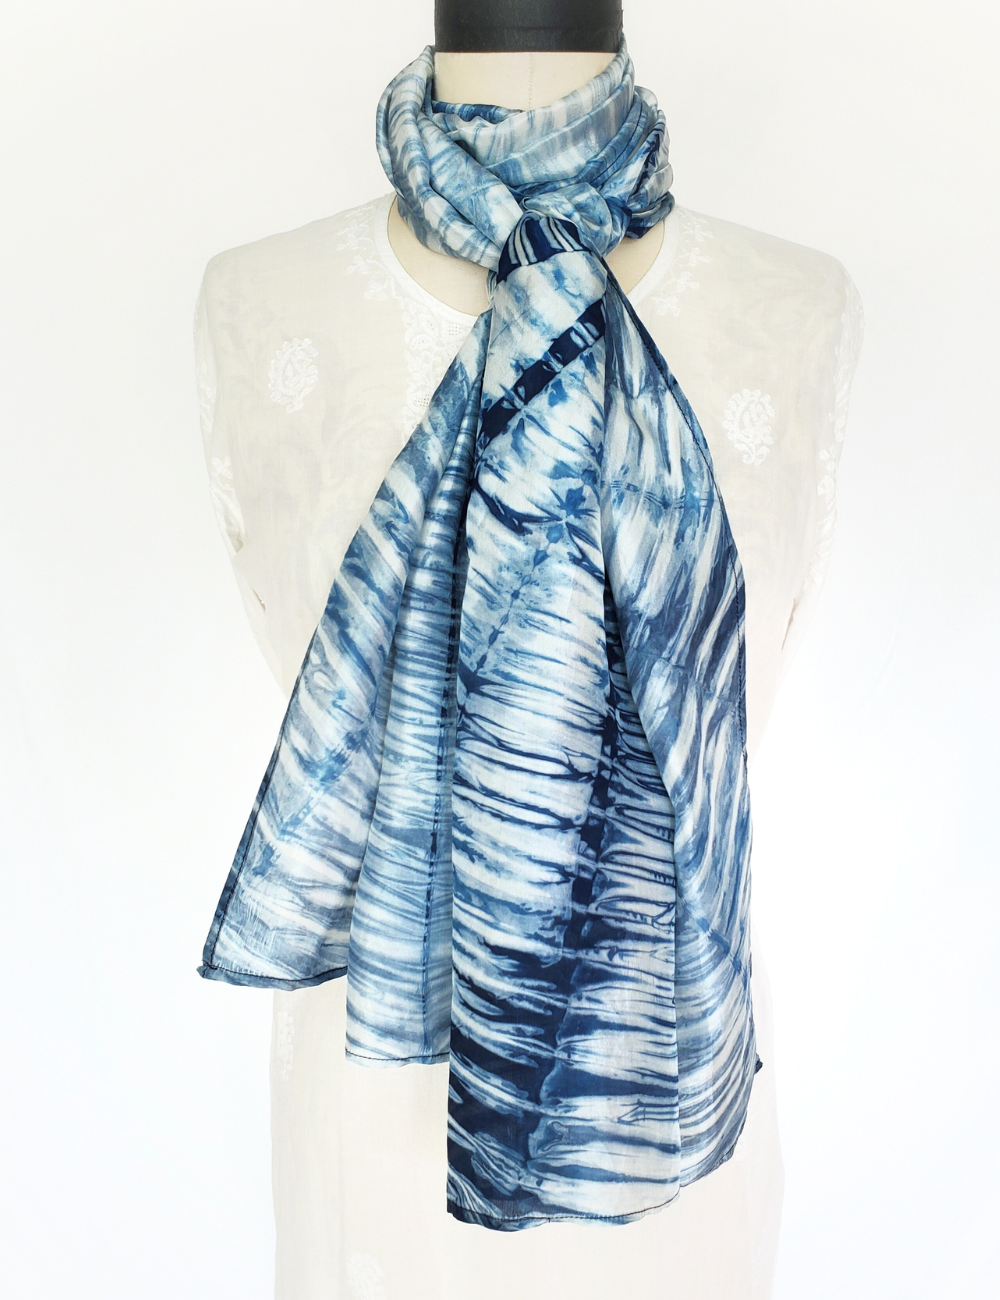 Pure Silk large scarf INDIGO Shibori hand dyed - SRI-02